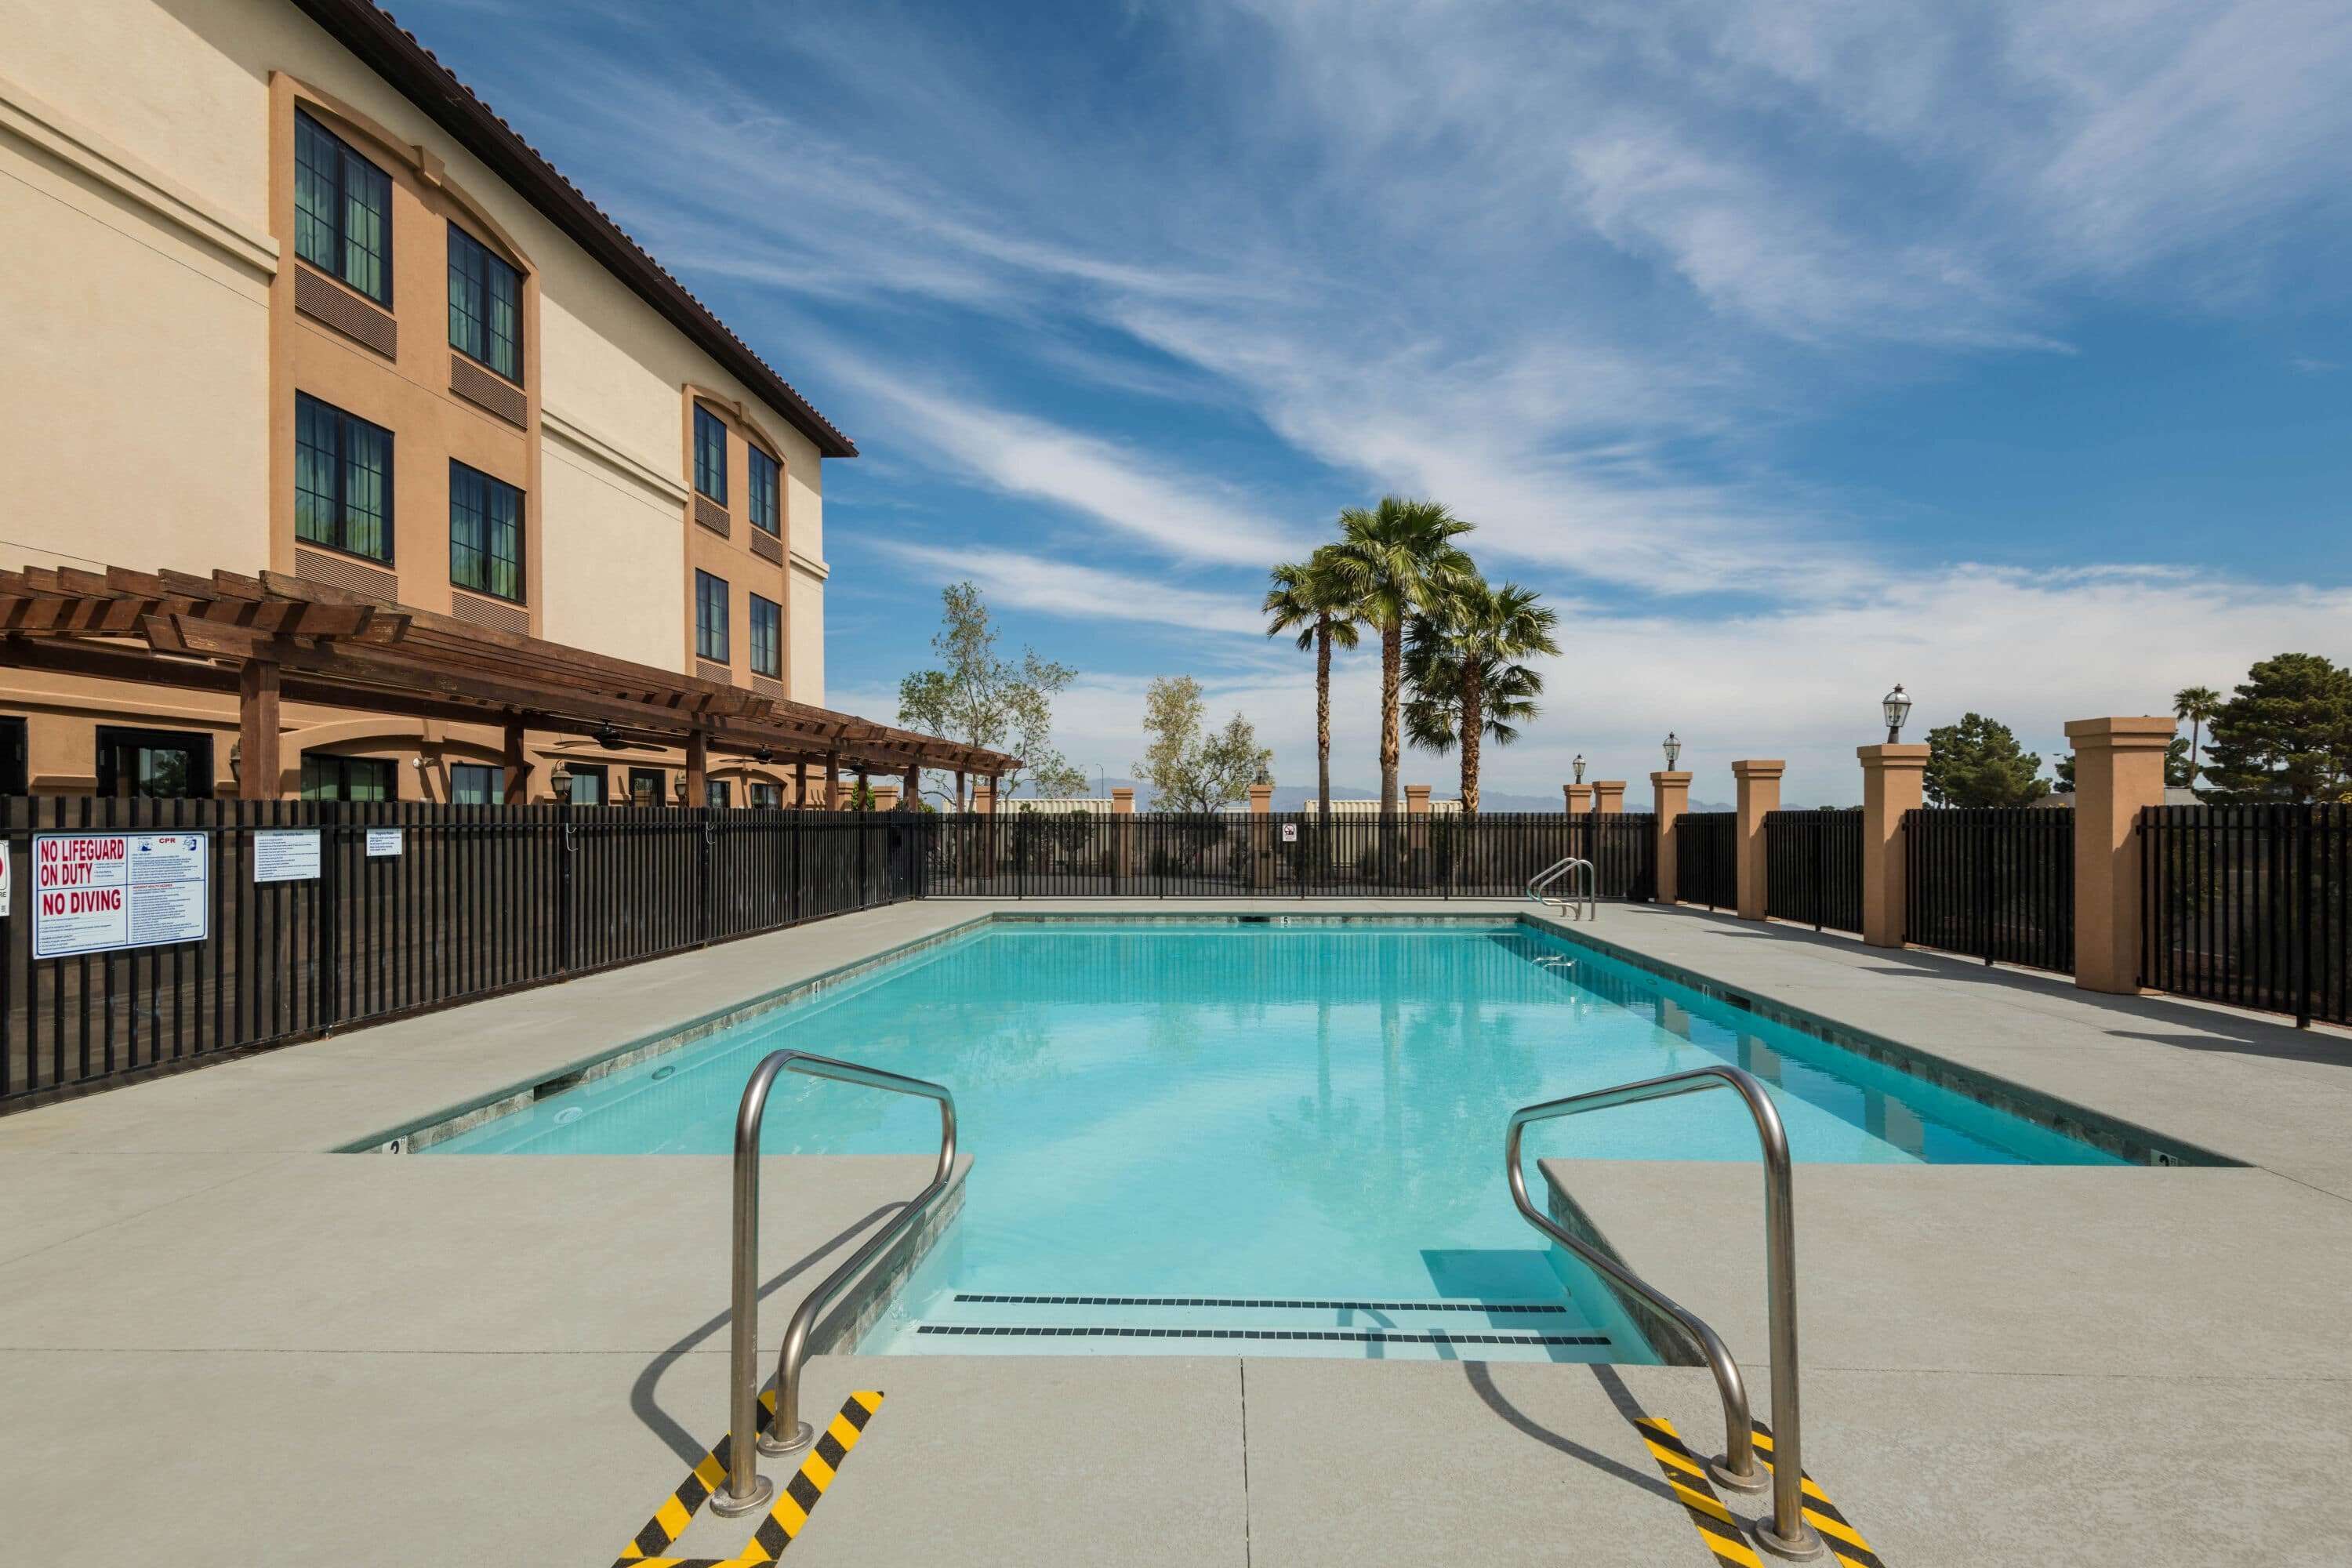 La Quinta Inn & Suites by Wyndham Las Vegas Airport South